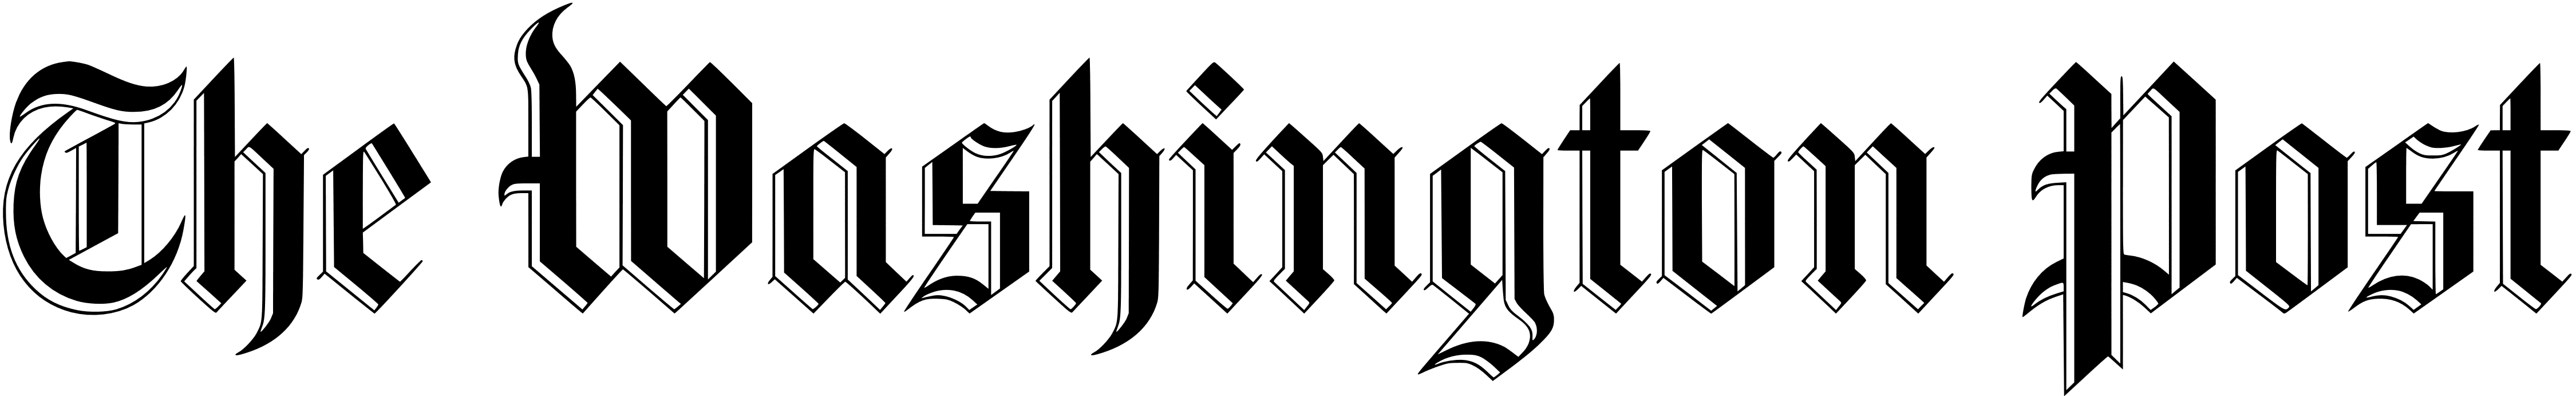 The Washington Post logo, logotype